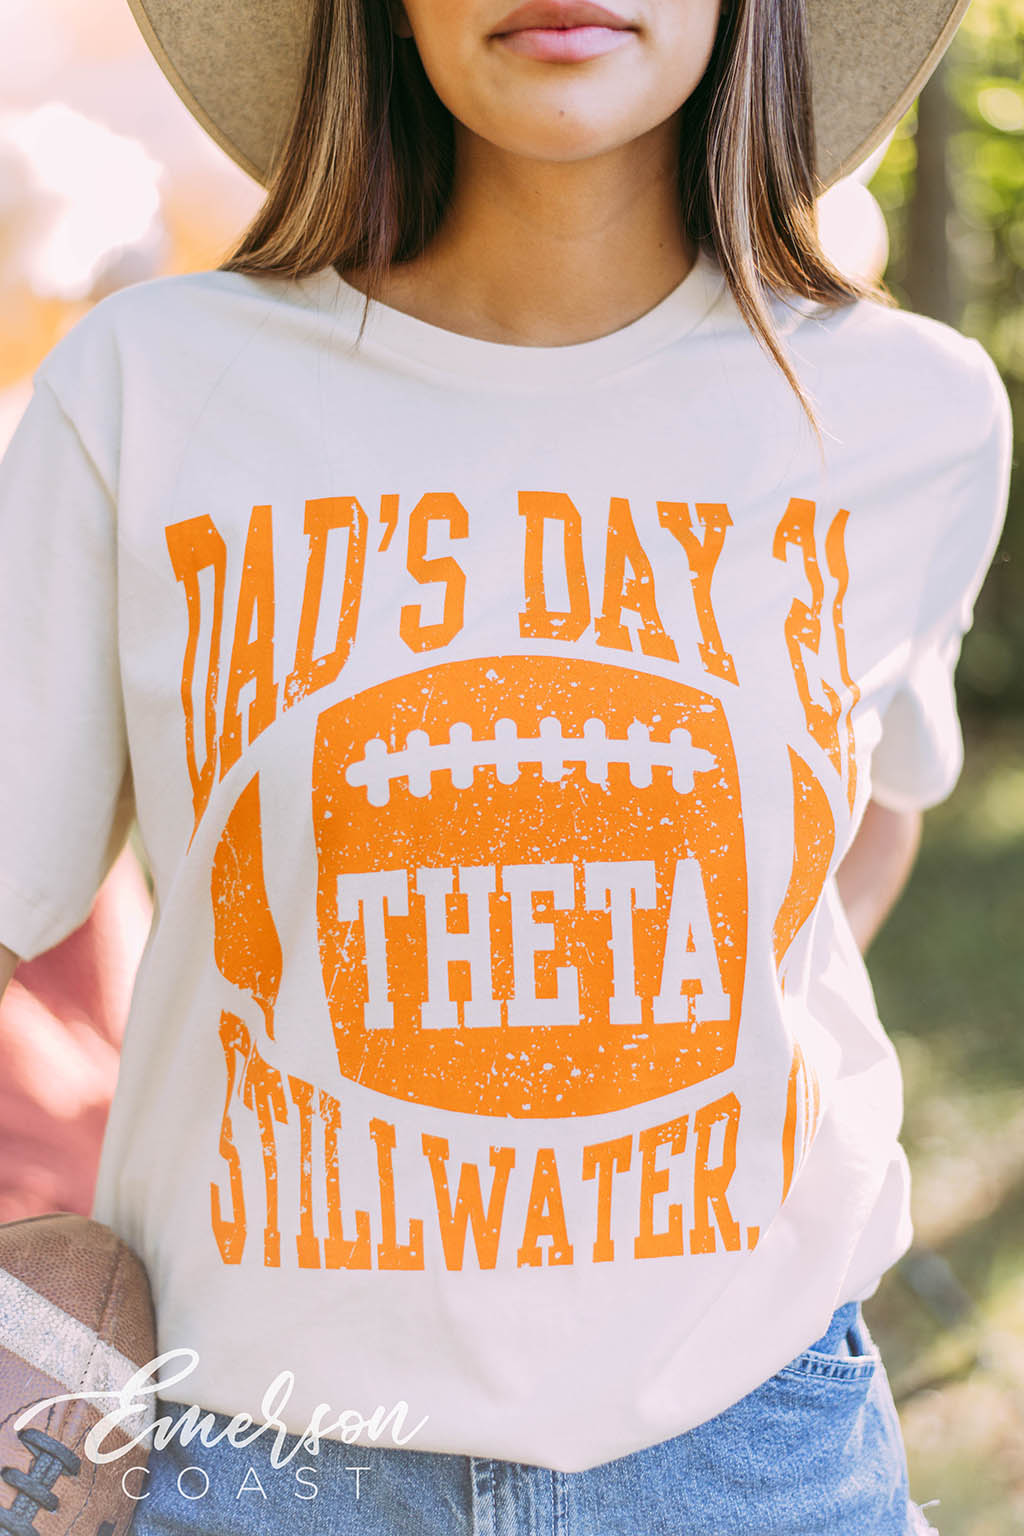 Kappa Alpha Theta Dads Day Tshirt